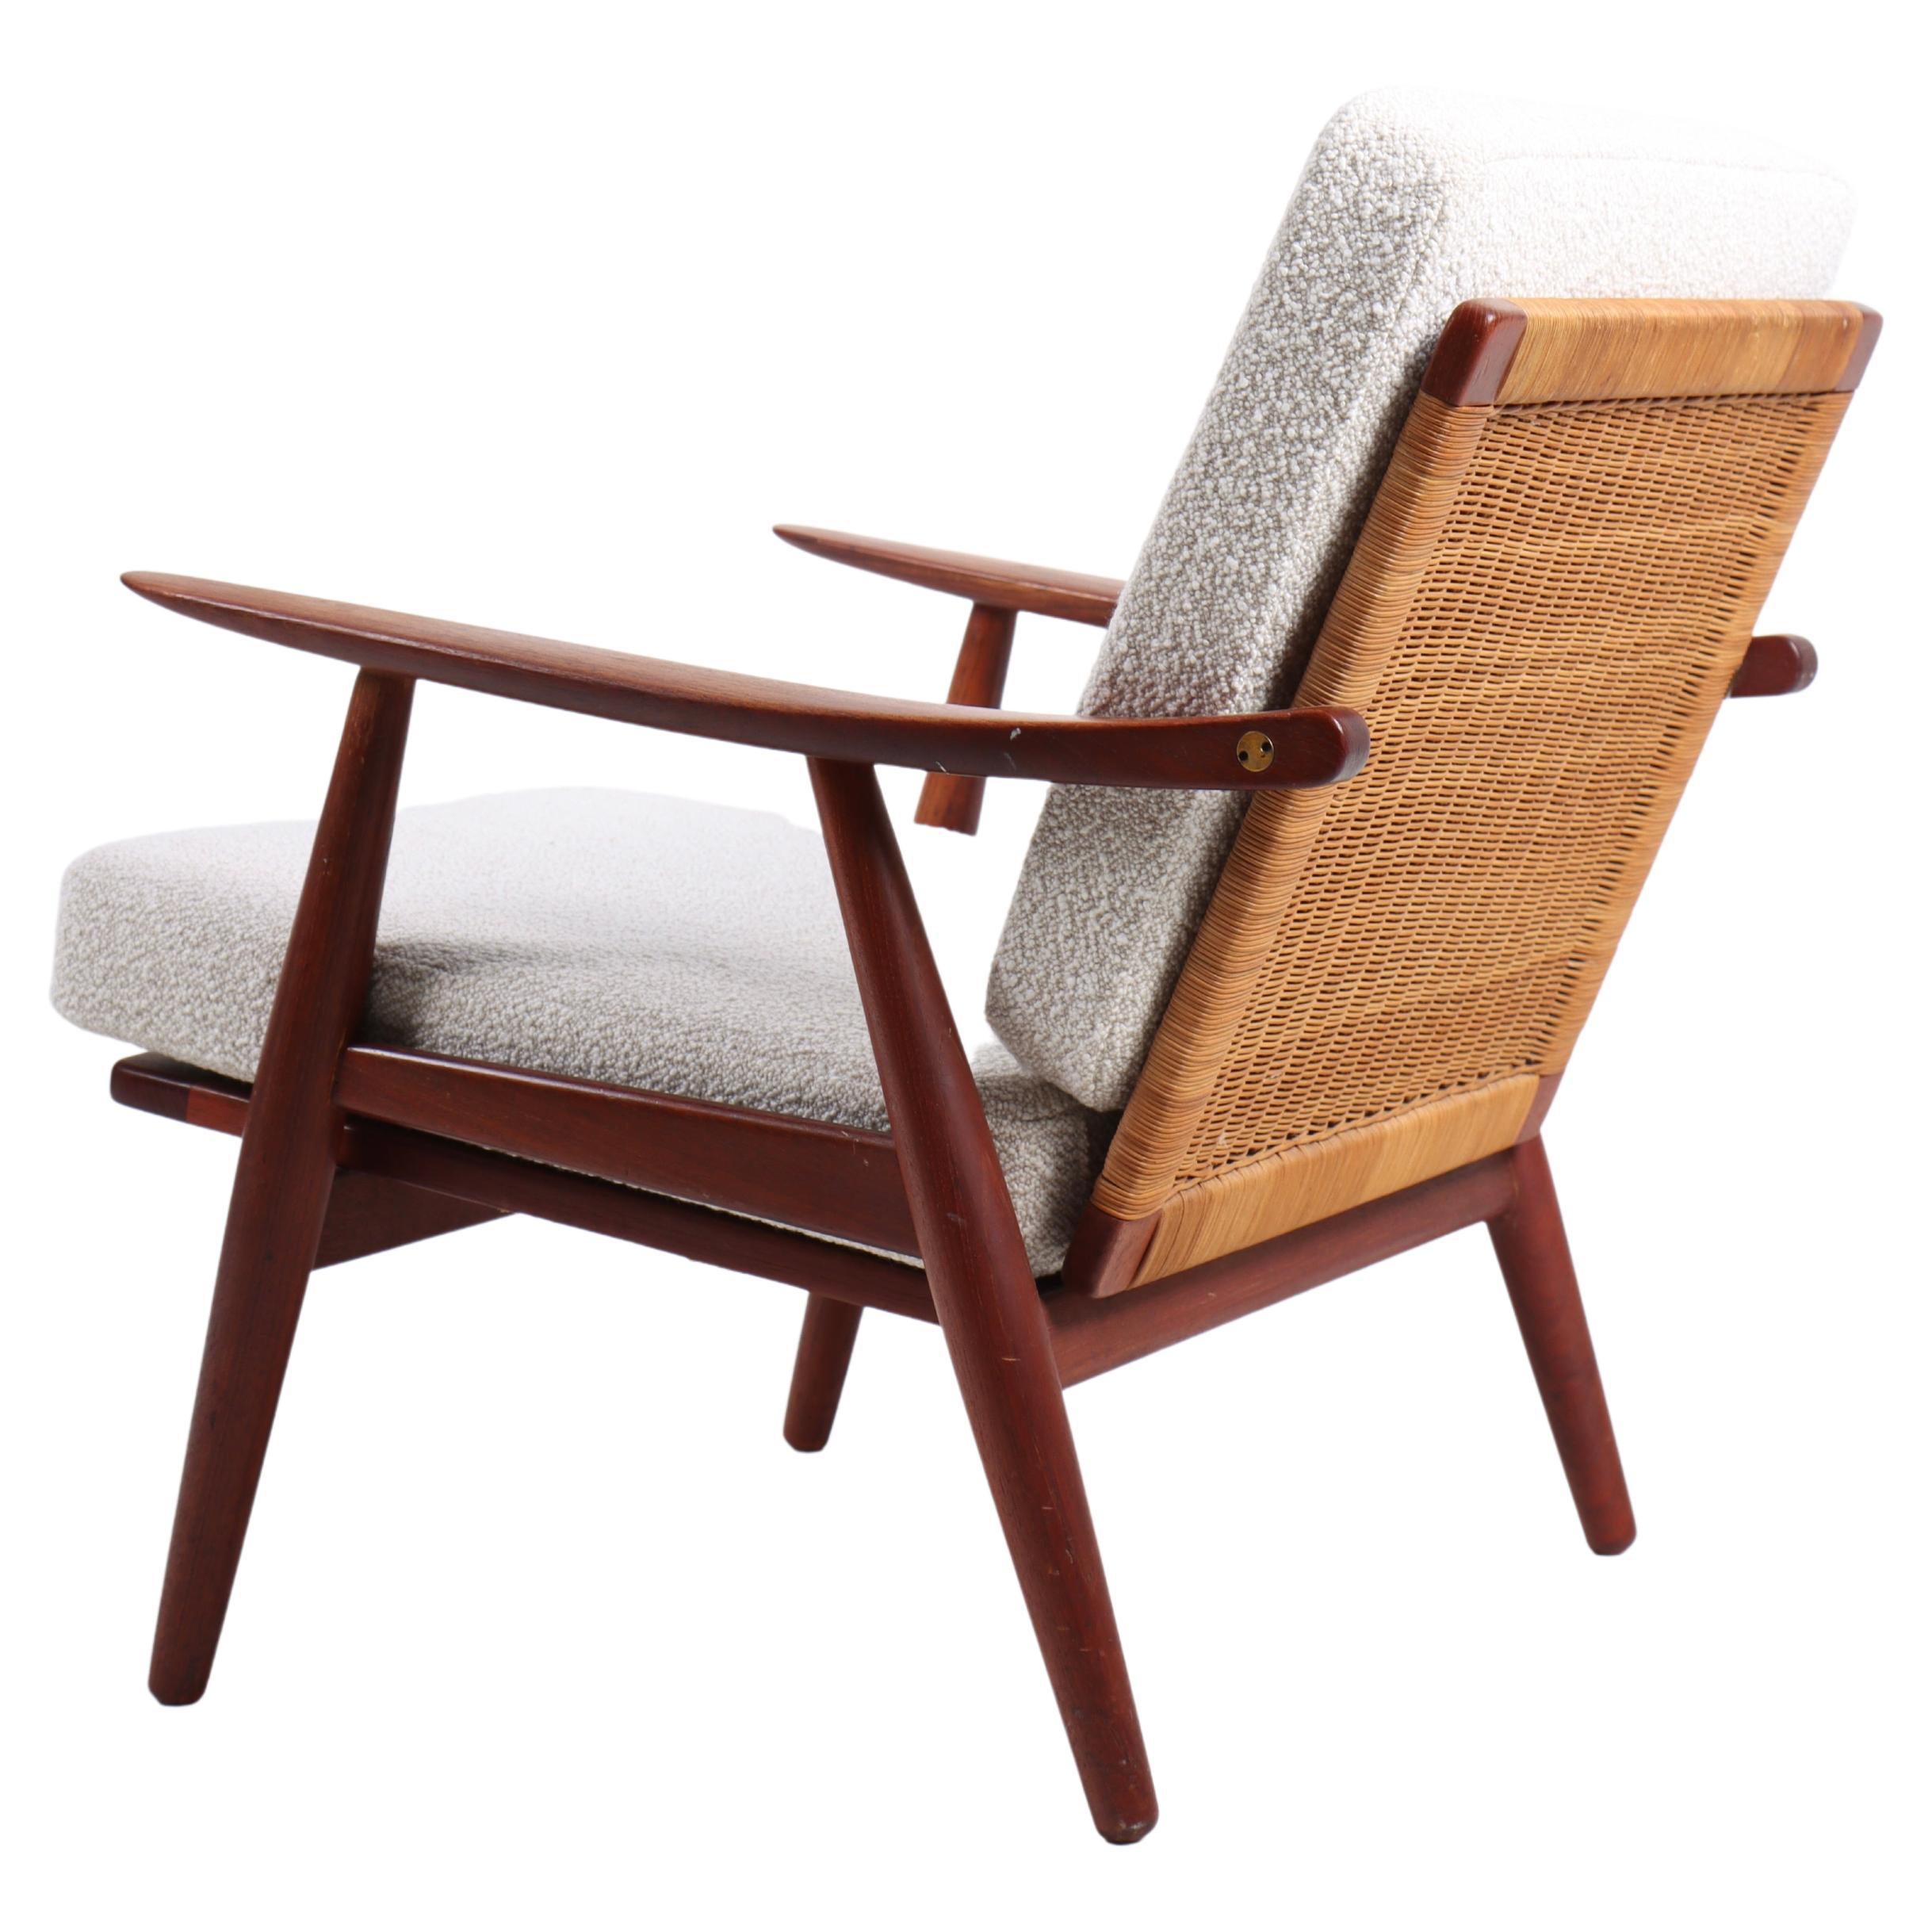 Danish Modern Lounge Chair in Teak and Cane by Hans Wegner by GETAMA, 1950